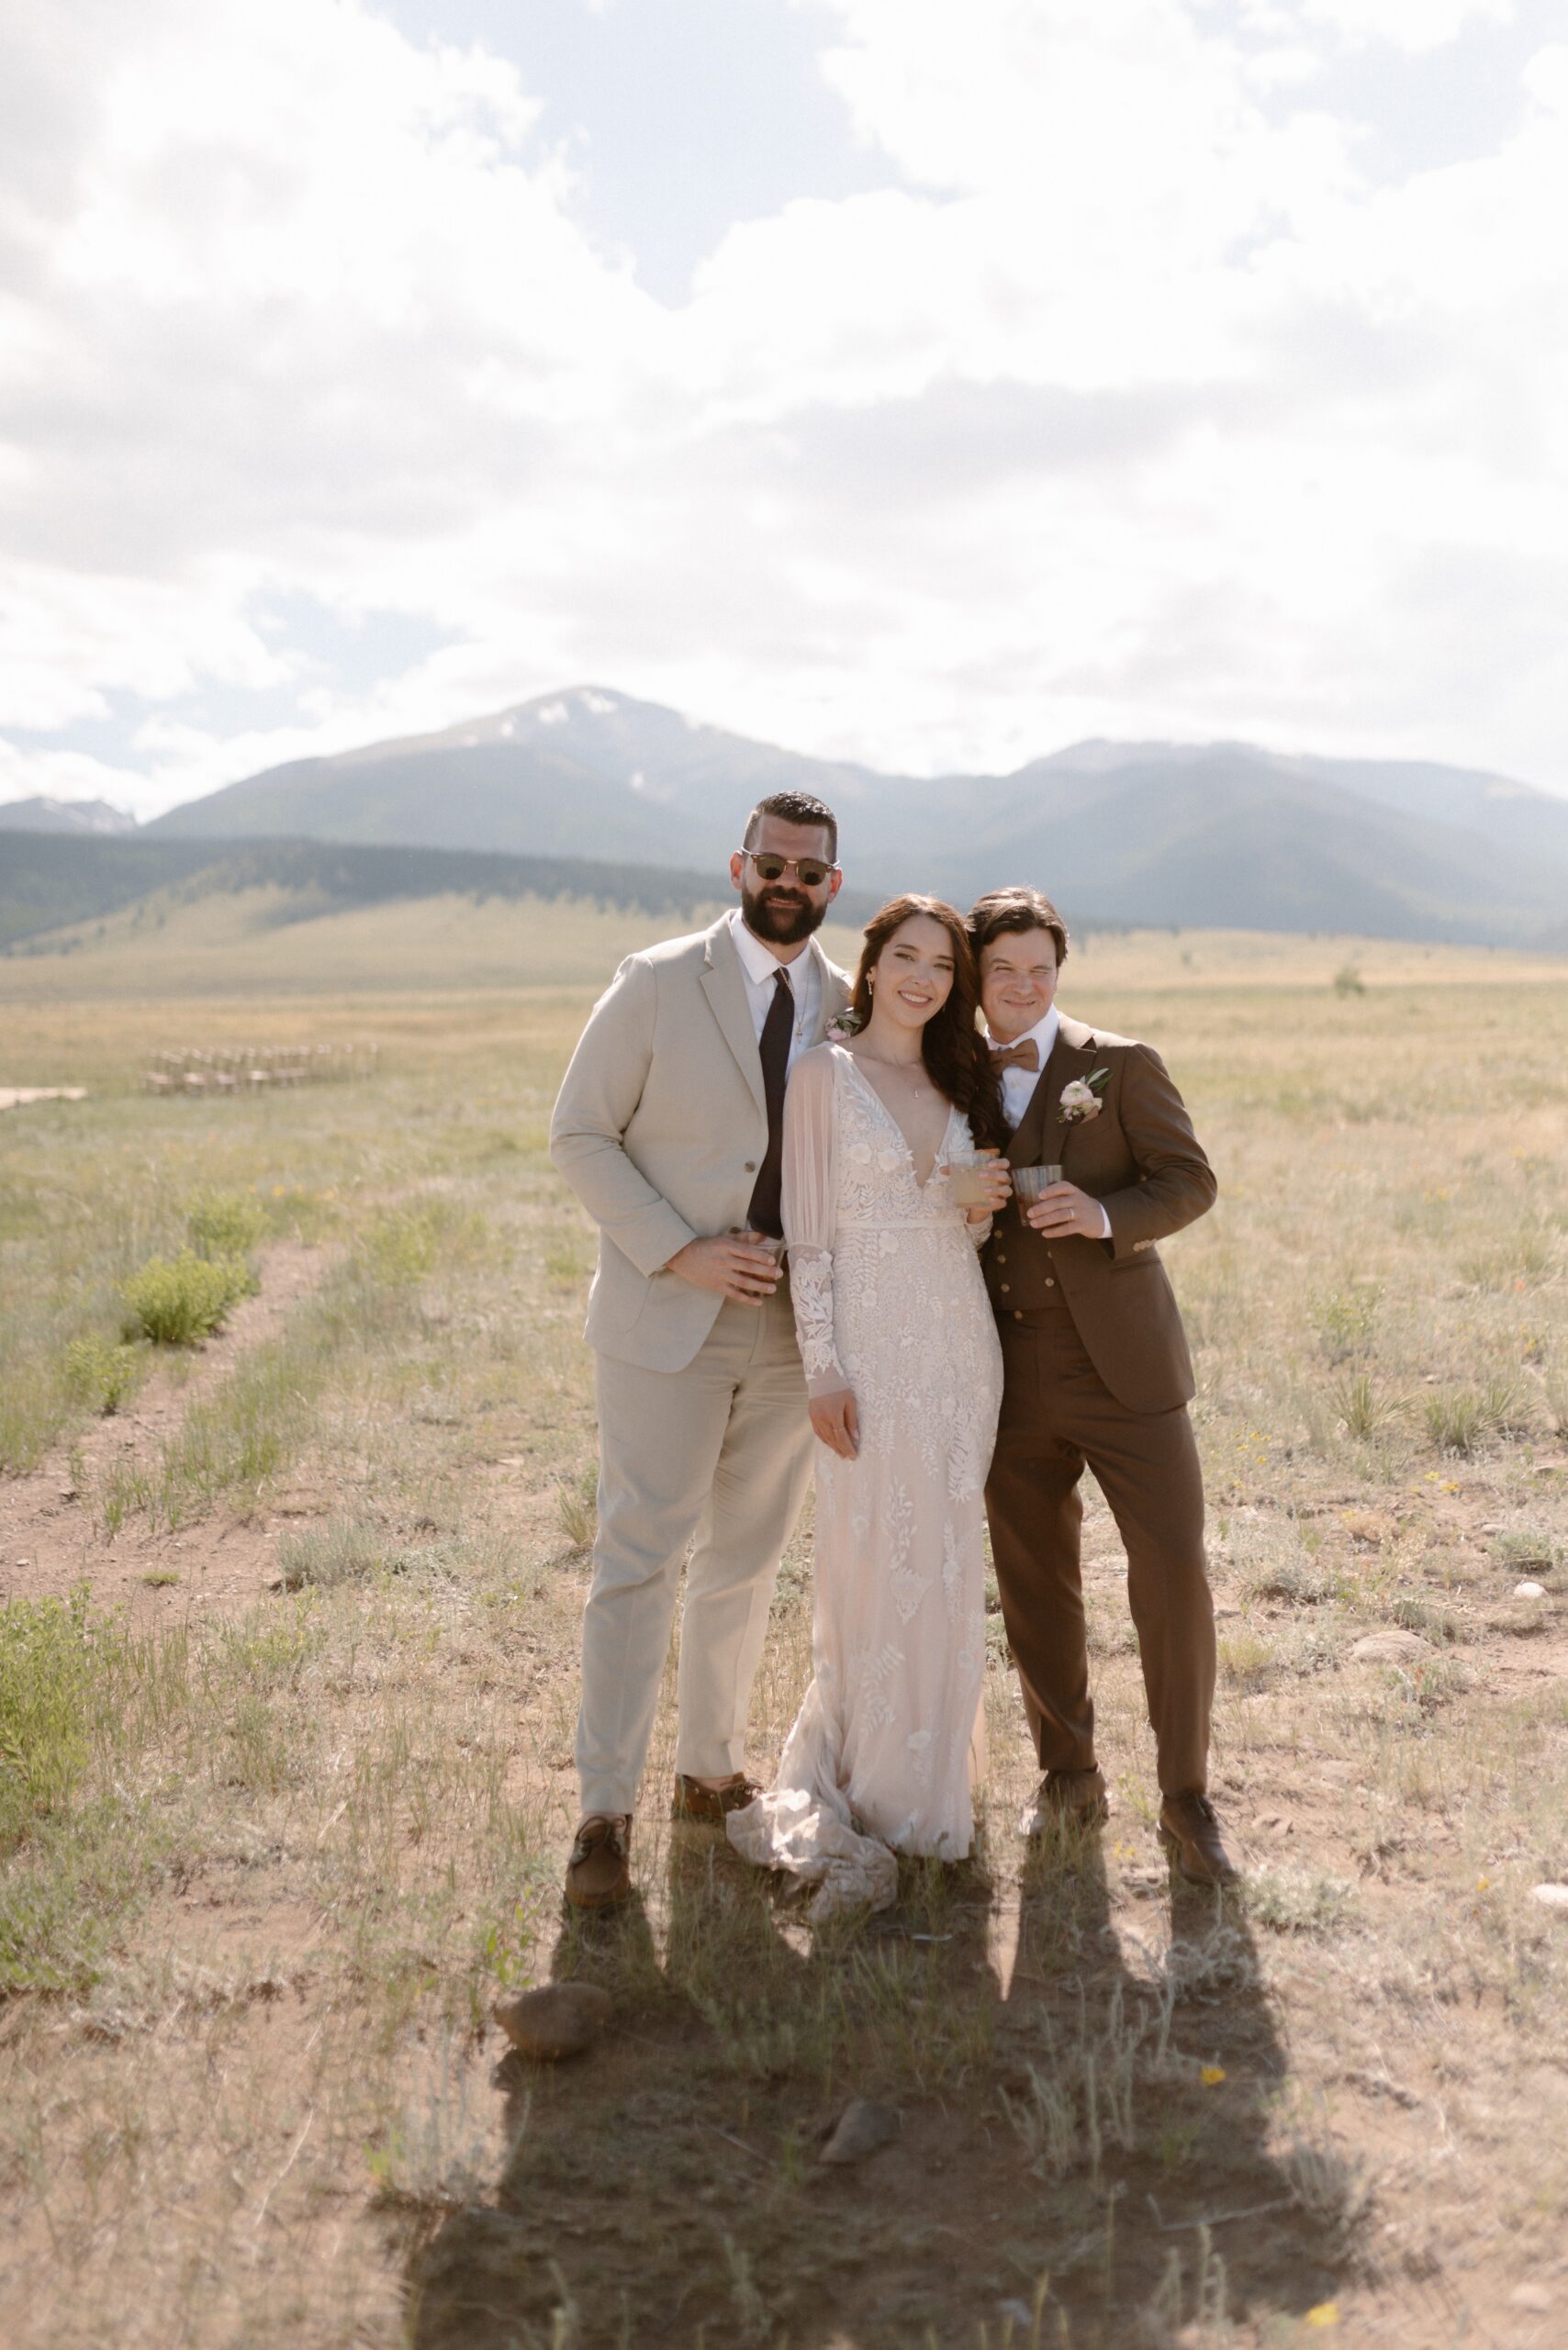 Wedding guests pose for photos at a Three Peaks Ranch wedding. Photo by Colorado wedding photographer Ashley Joyce.